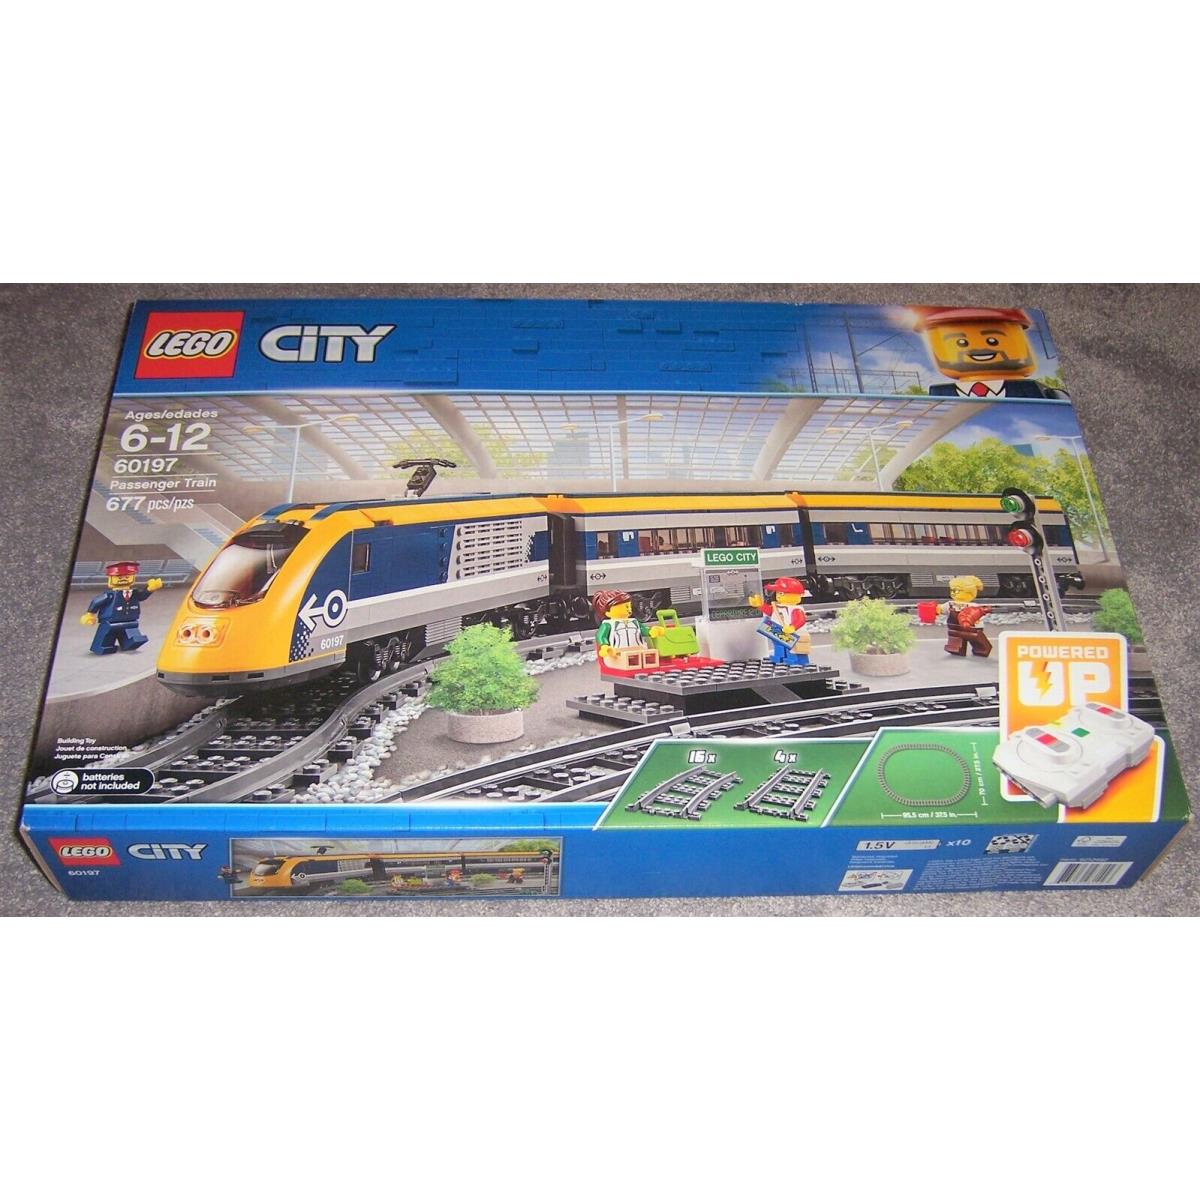 Lego City Town Passenger Train 60197 Building Set Powered Up Bluetooth RC